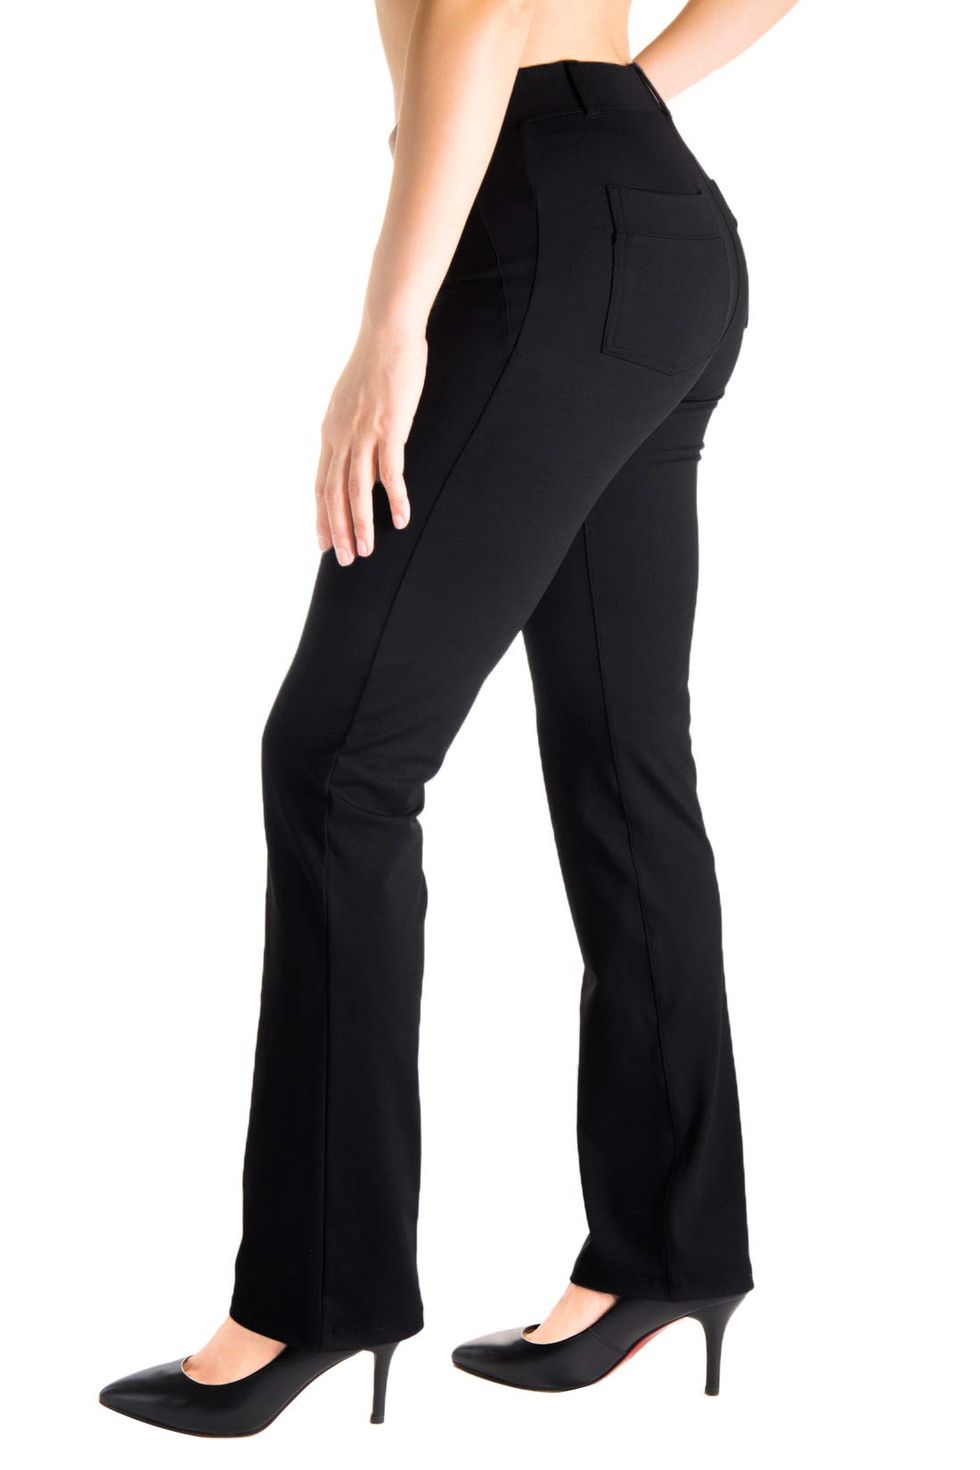 SweatyRocks Women's Casual High Waist Skinny Leggings Stretchy Work Pants  Plaid Black X-Small at  Women's Clothing store